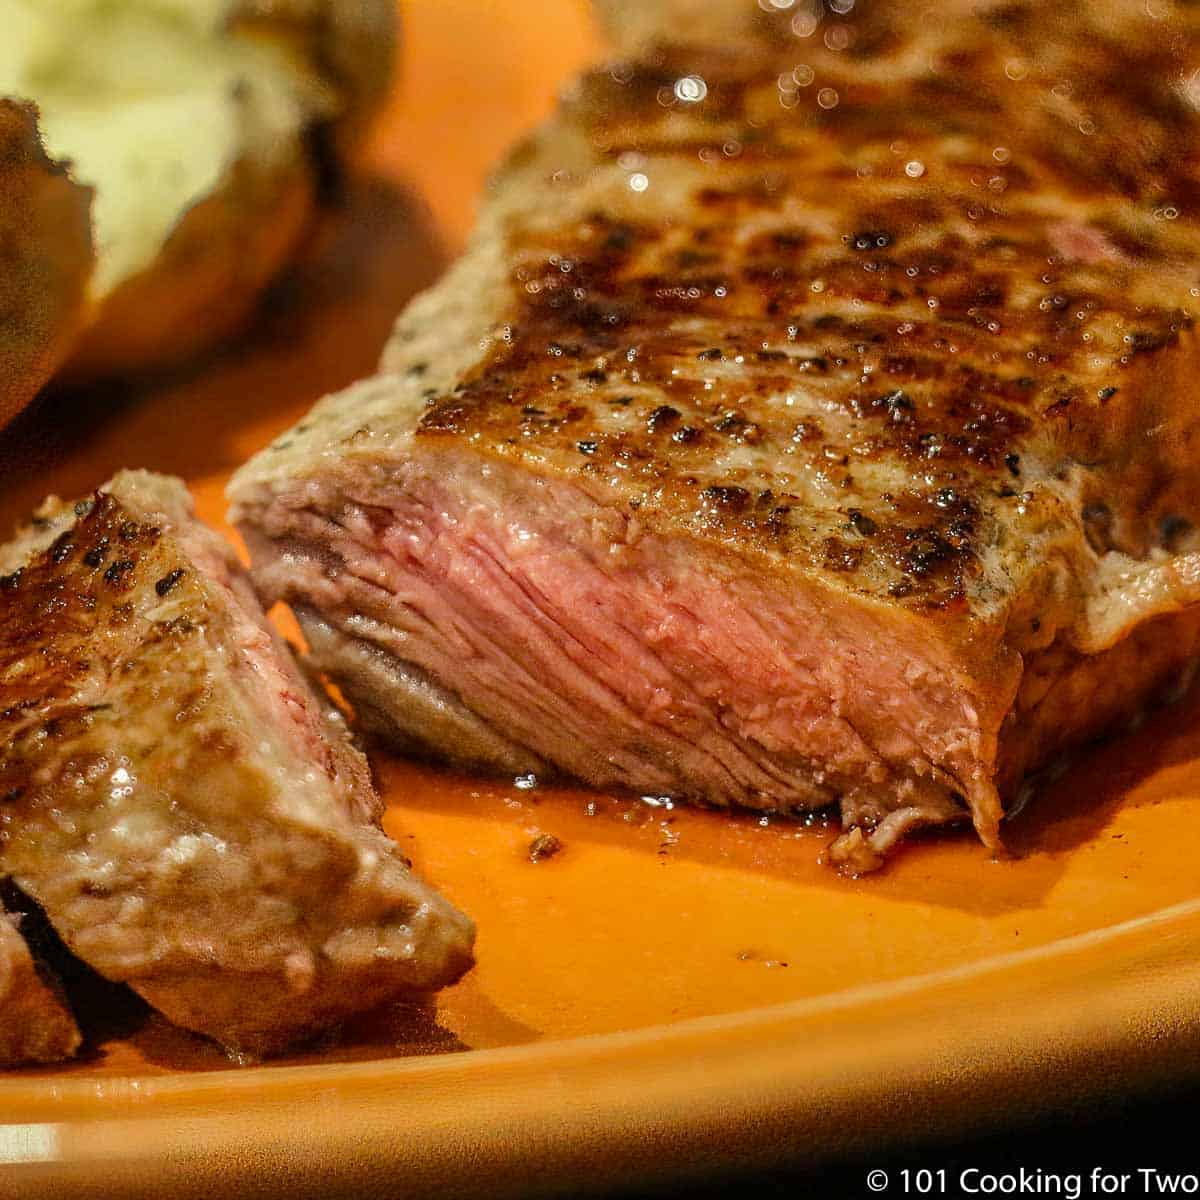 NY strip steak cut on an orange plate.